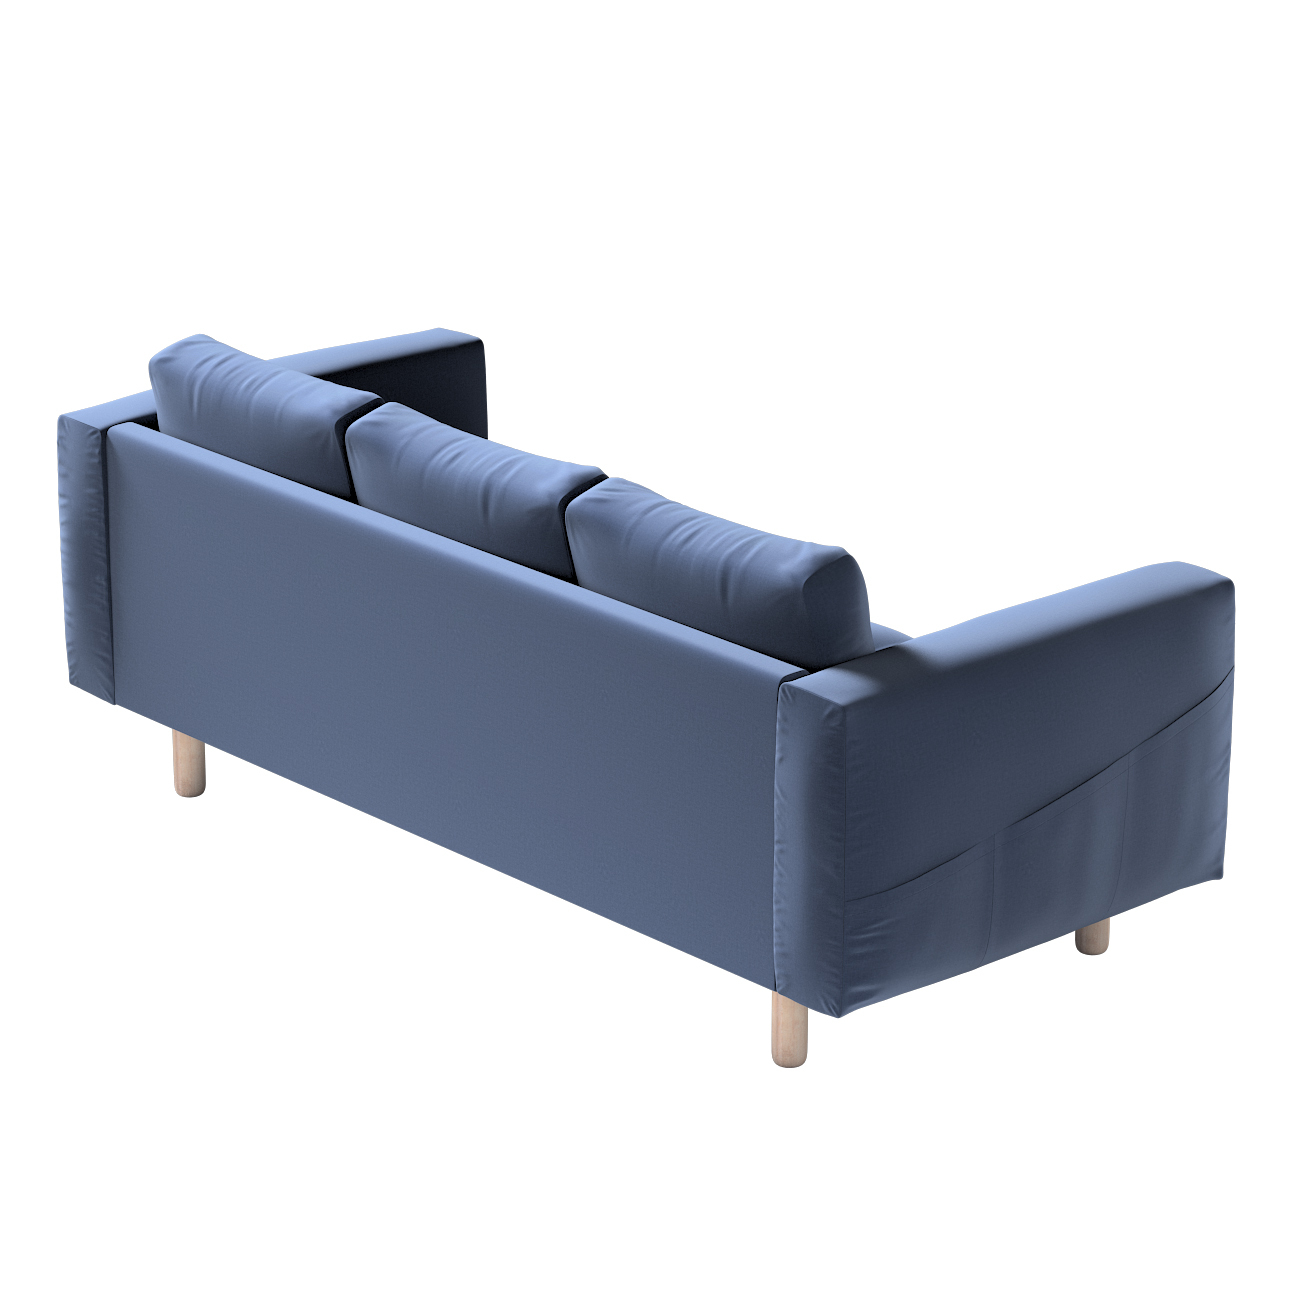 Bezug für Norsborg 3-Sitzer Sofa, dunkelblau, Norsborg 3-Sitzer Sofabezug, günstig online kaufen